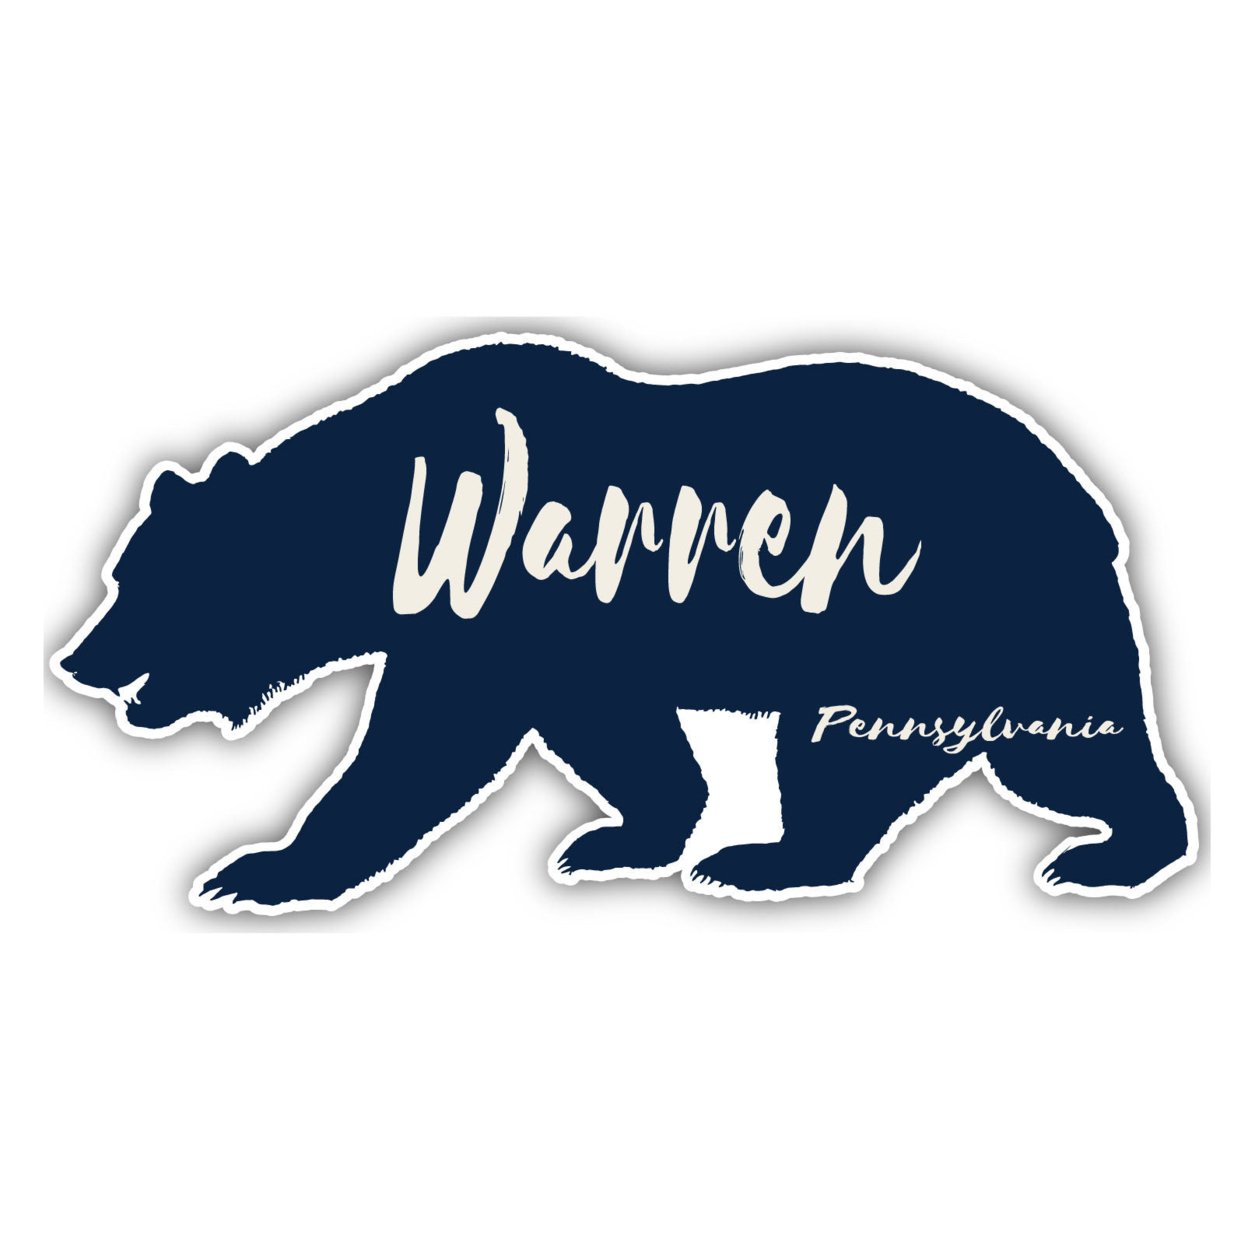 Warren Pennsylvania Souvenir Decorative Stickers (Choose Theme And Size) - Single Unit, 4-Inch, Bear